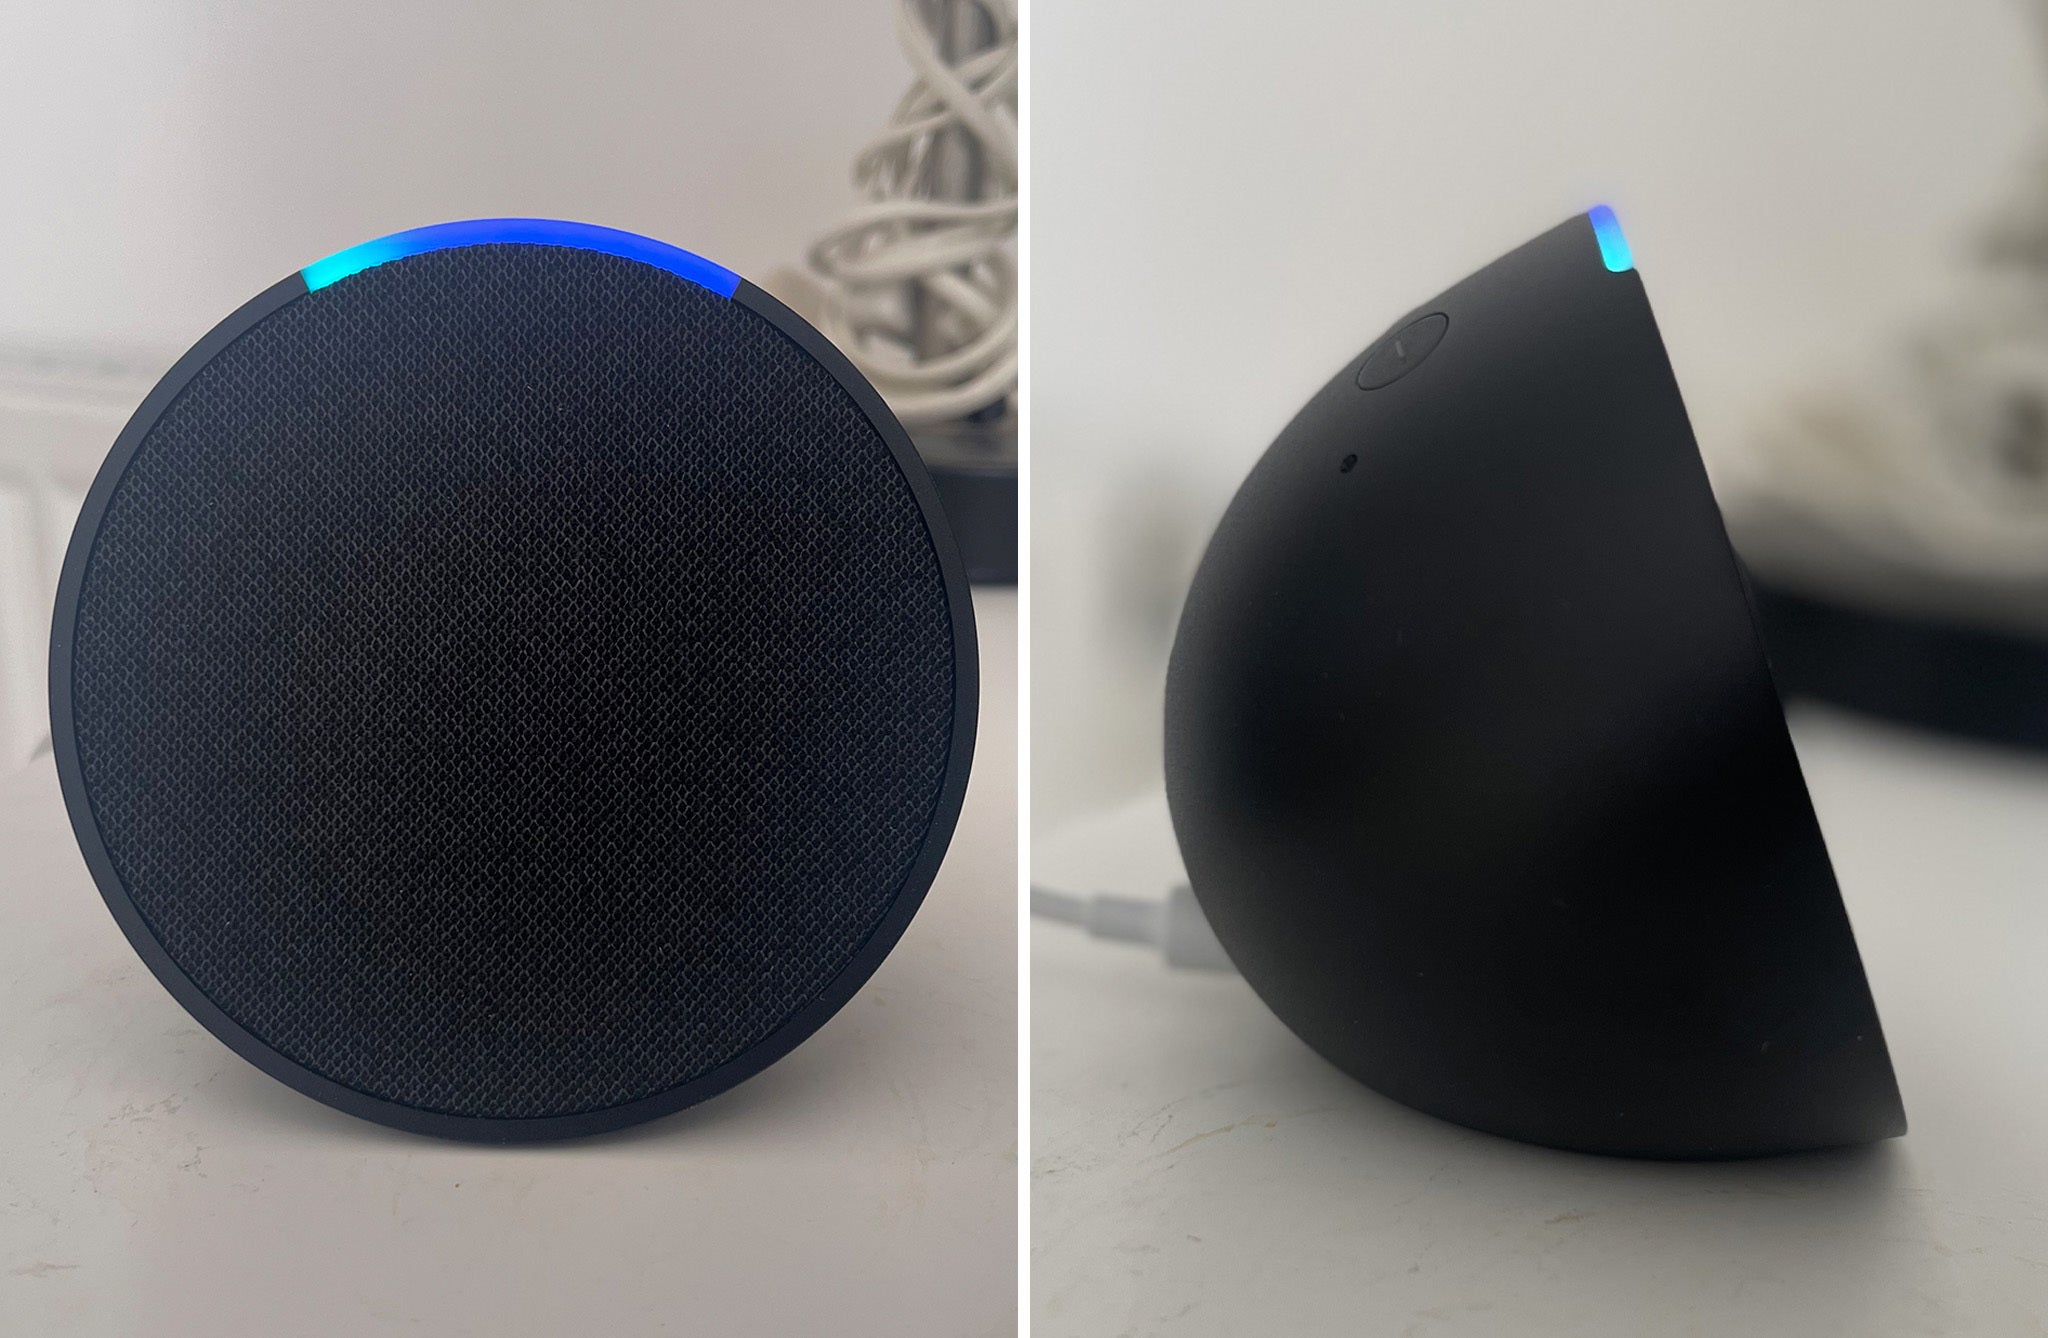 Echo Pop vs Echo Dot